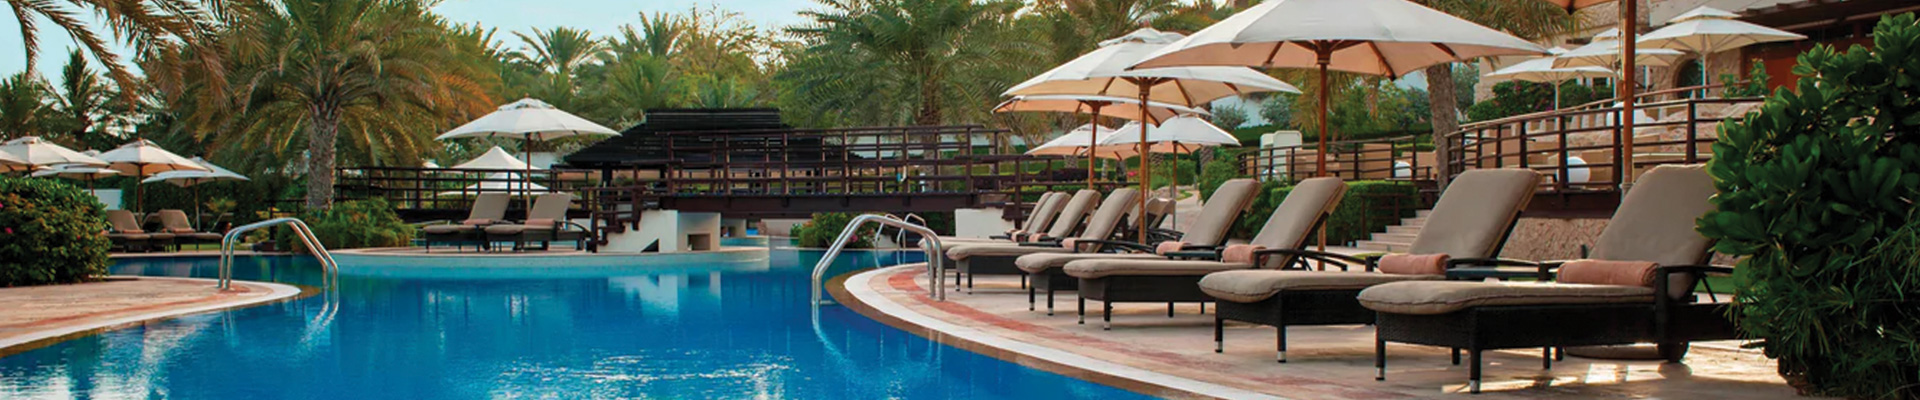 5* The Westin Dubai Mina Seyahi Beach Resort & Marina - Dubai Package (5 nights)